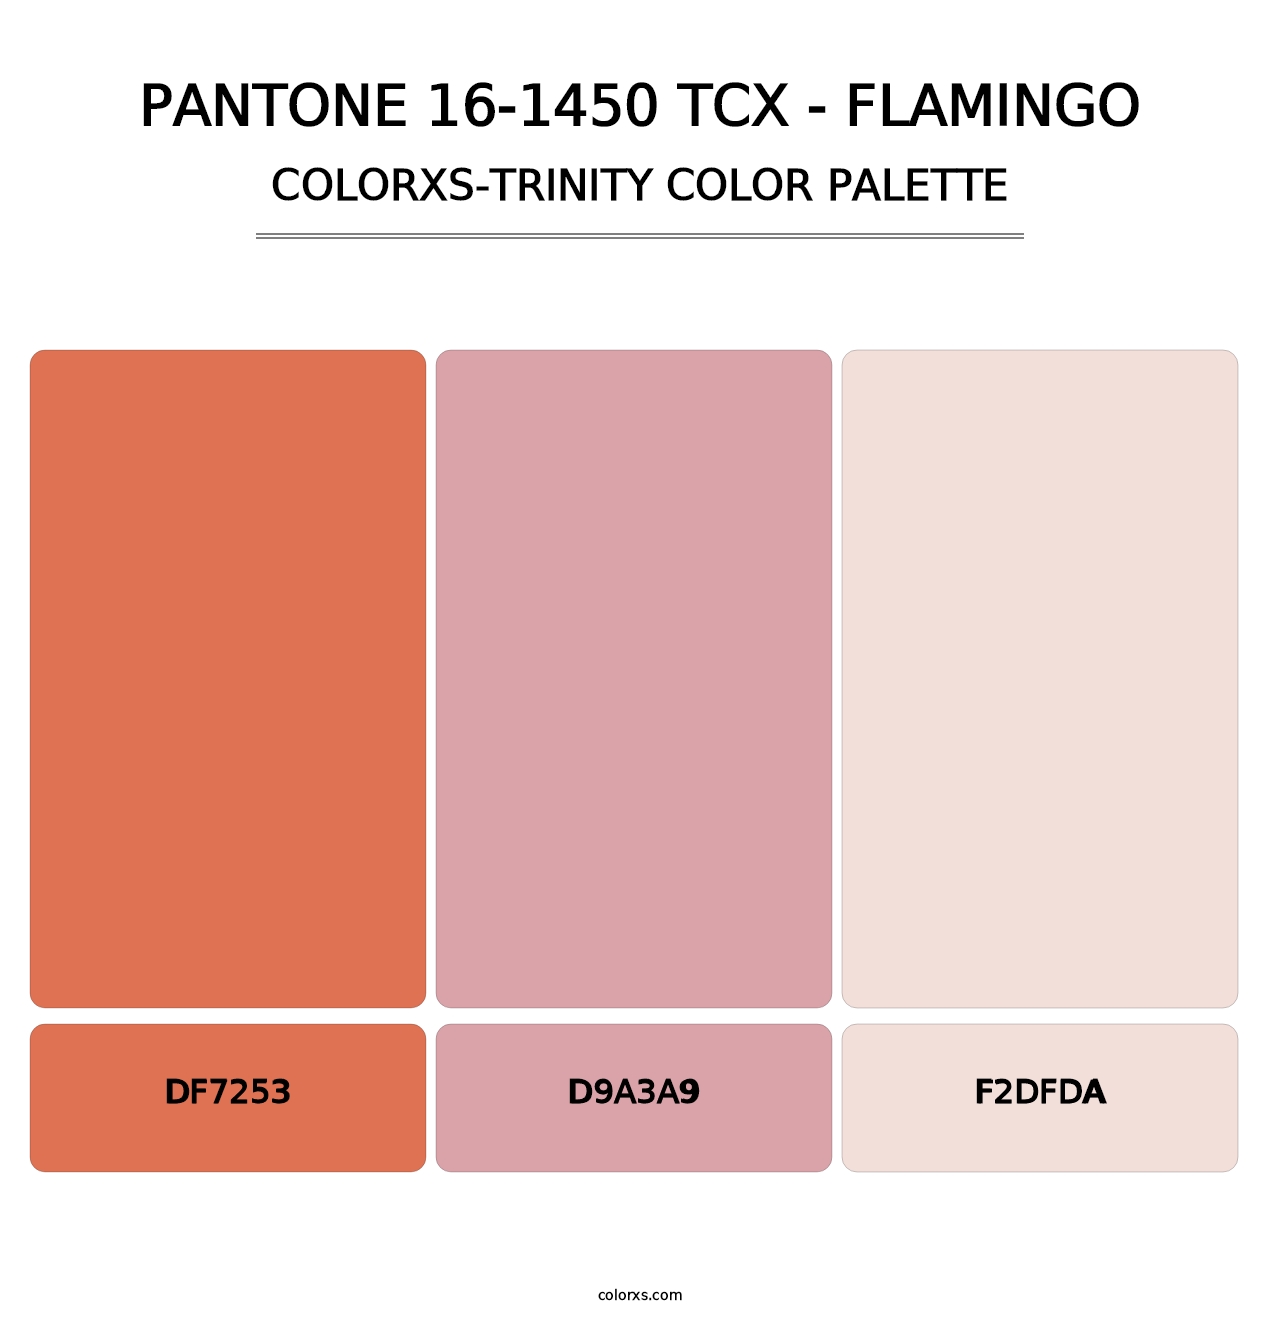 PANTONE 16-1450 TCX - Flamingo - Colorxs Trinity Palette